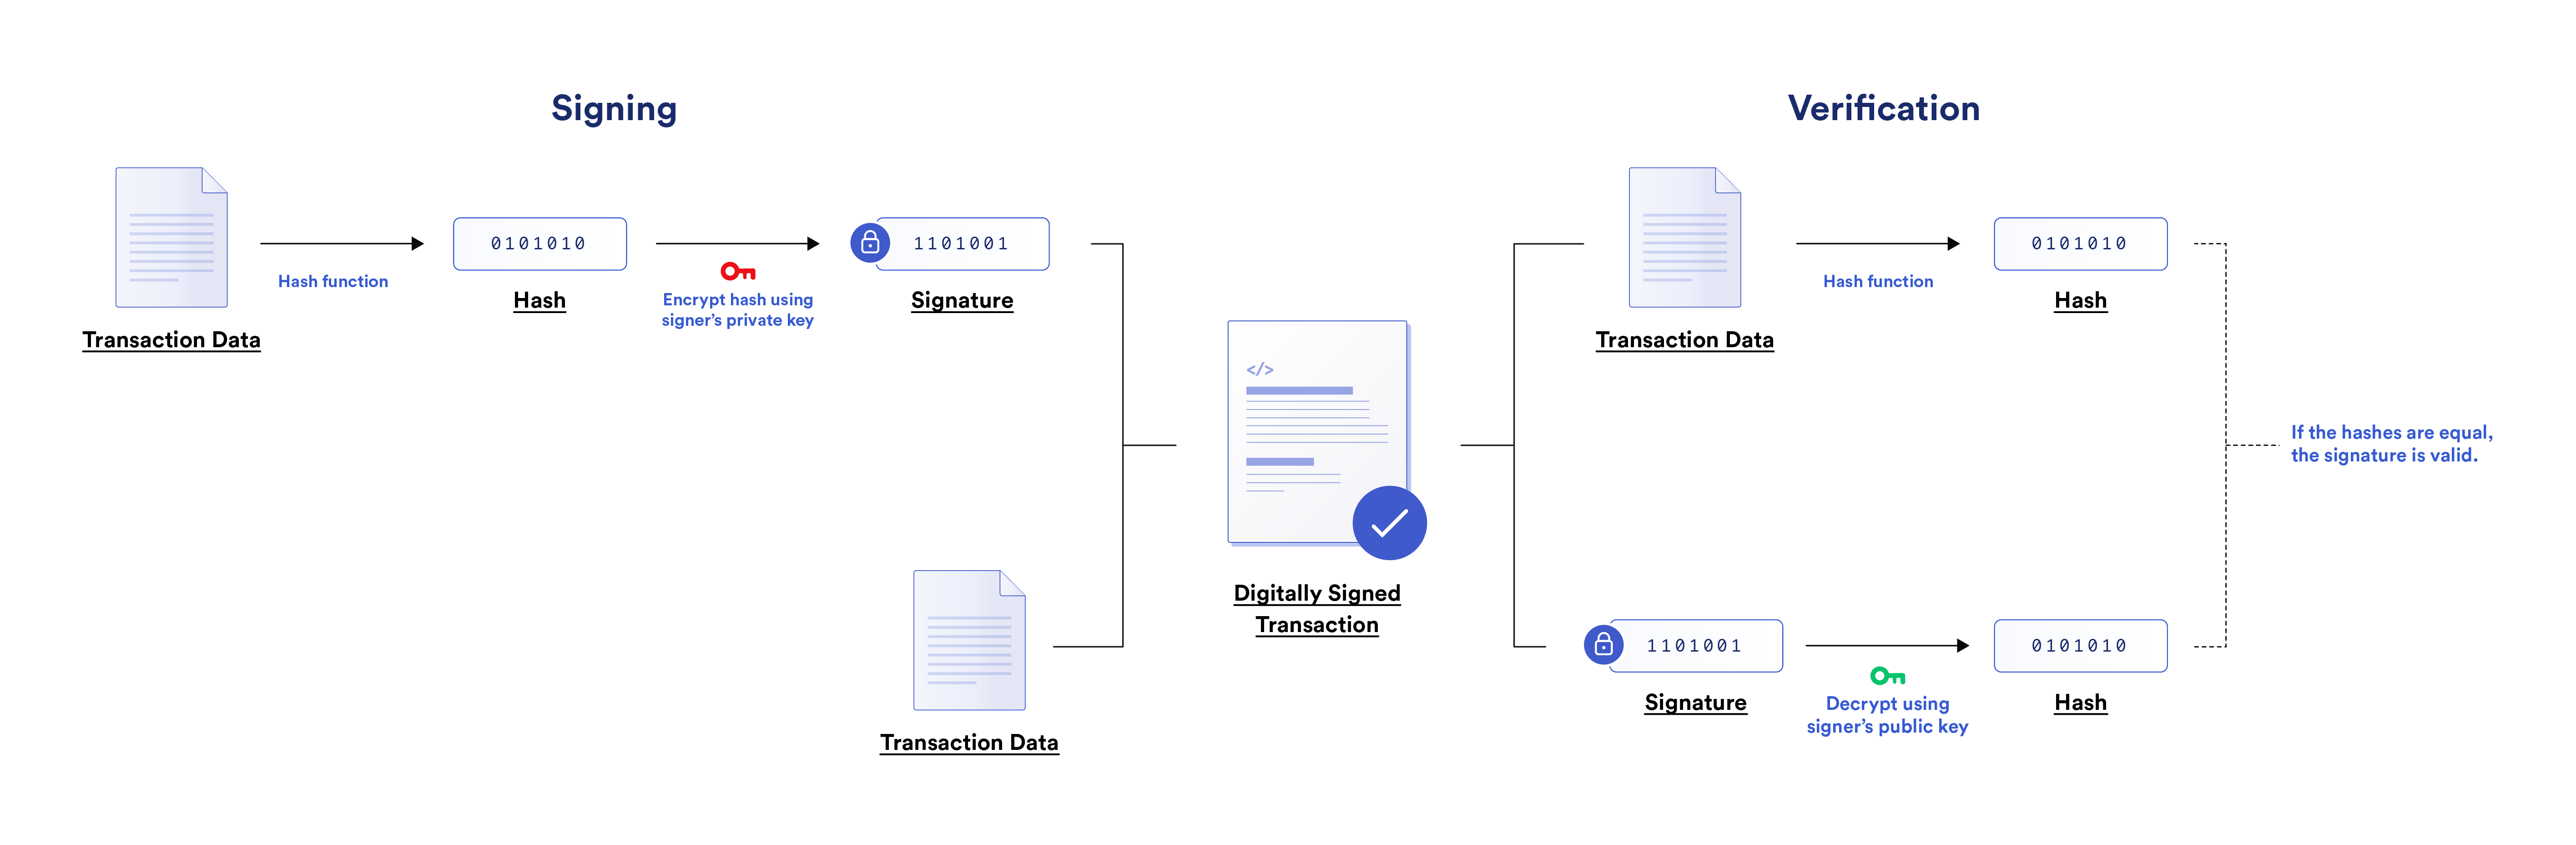 Blockchain transaction authentication and verification